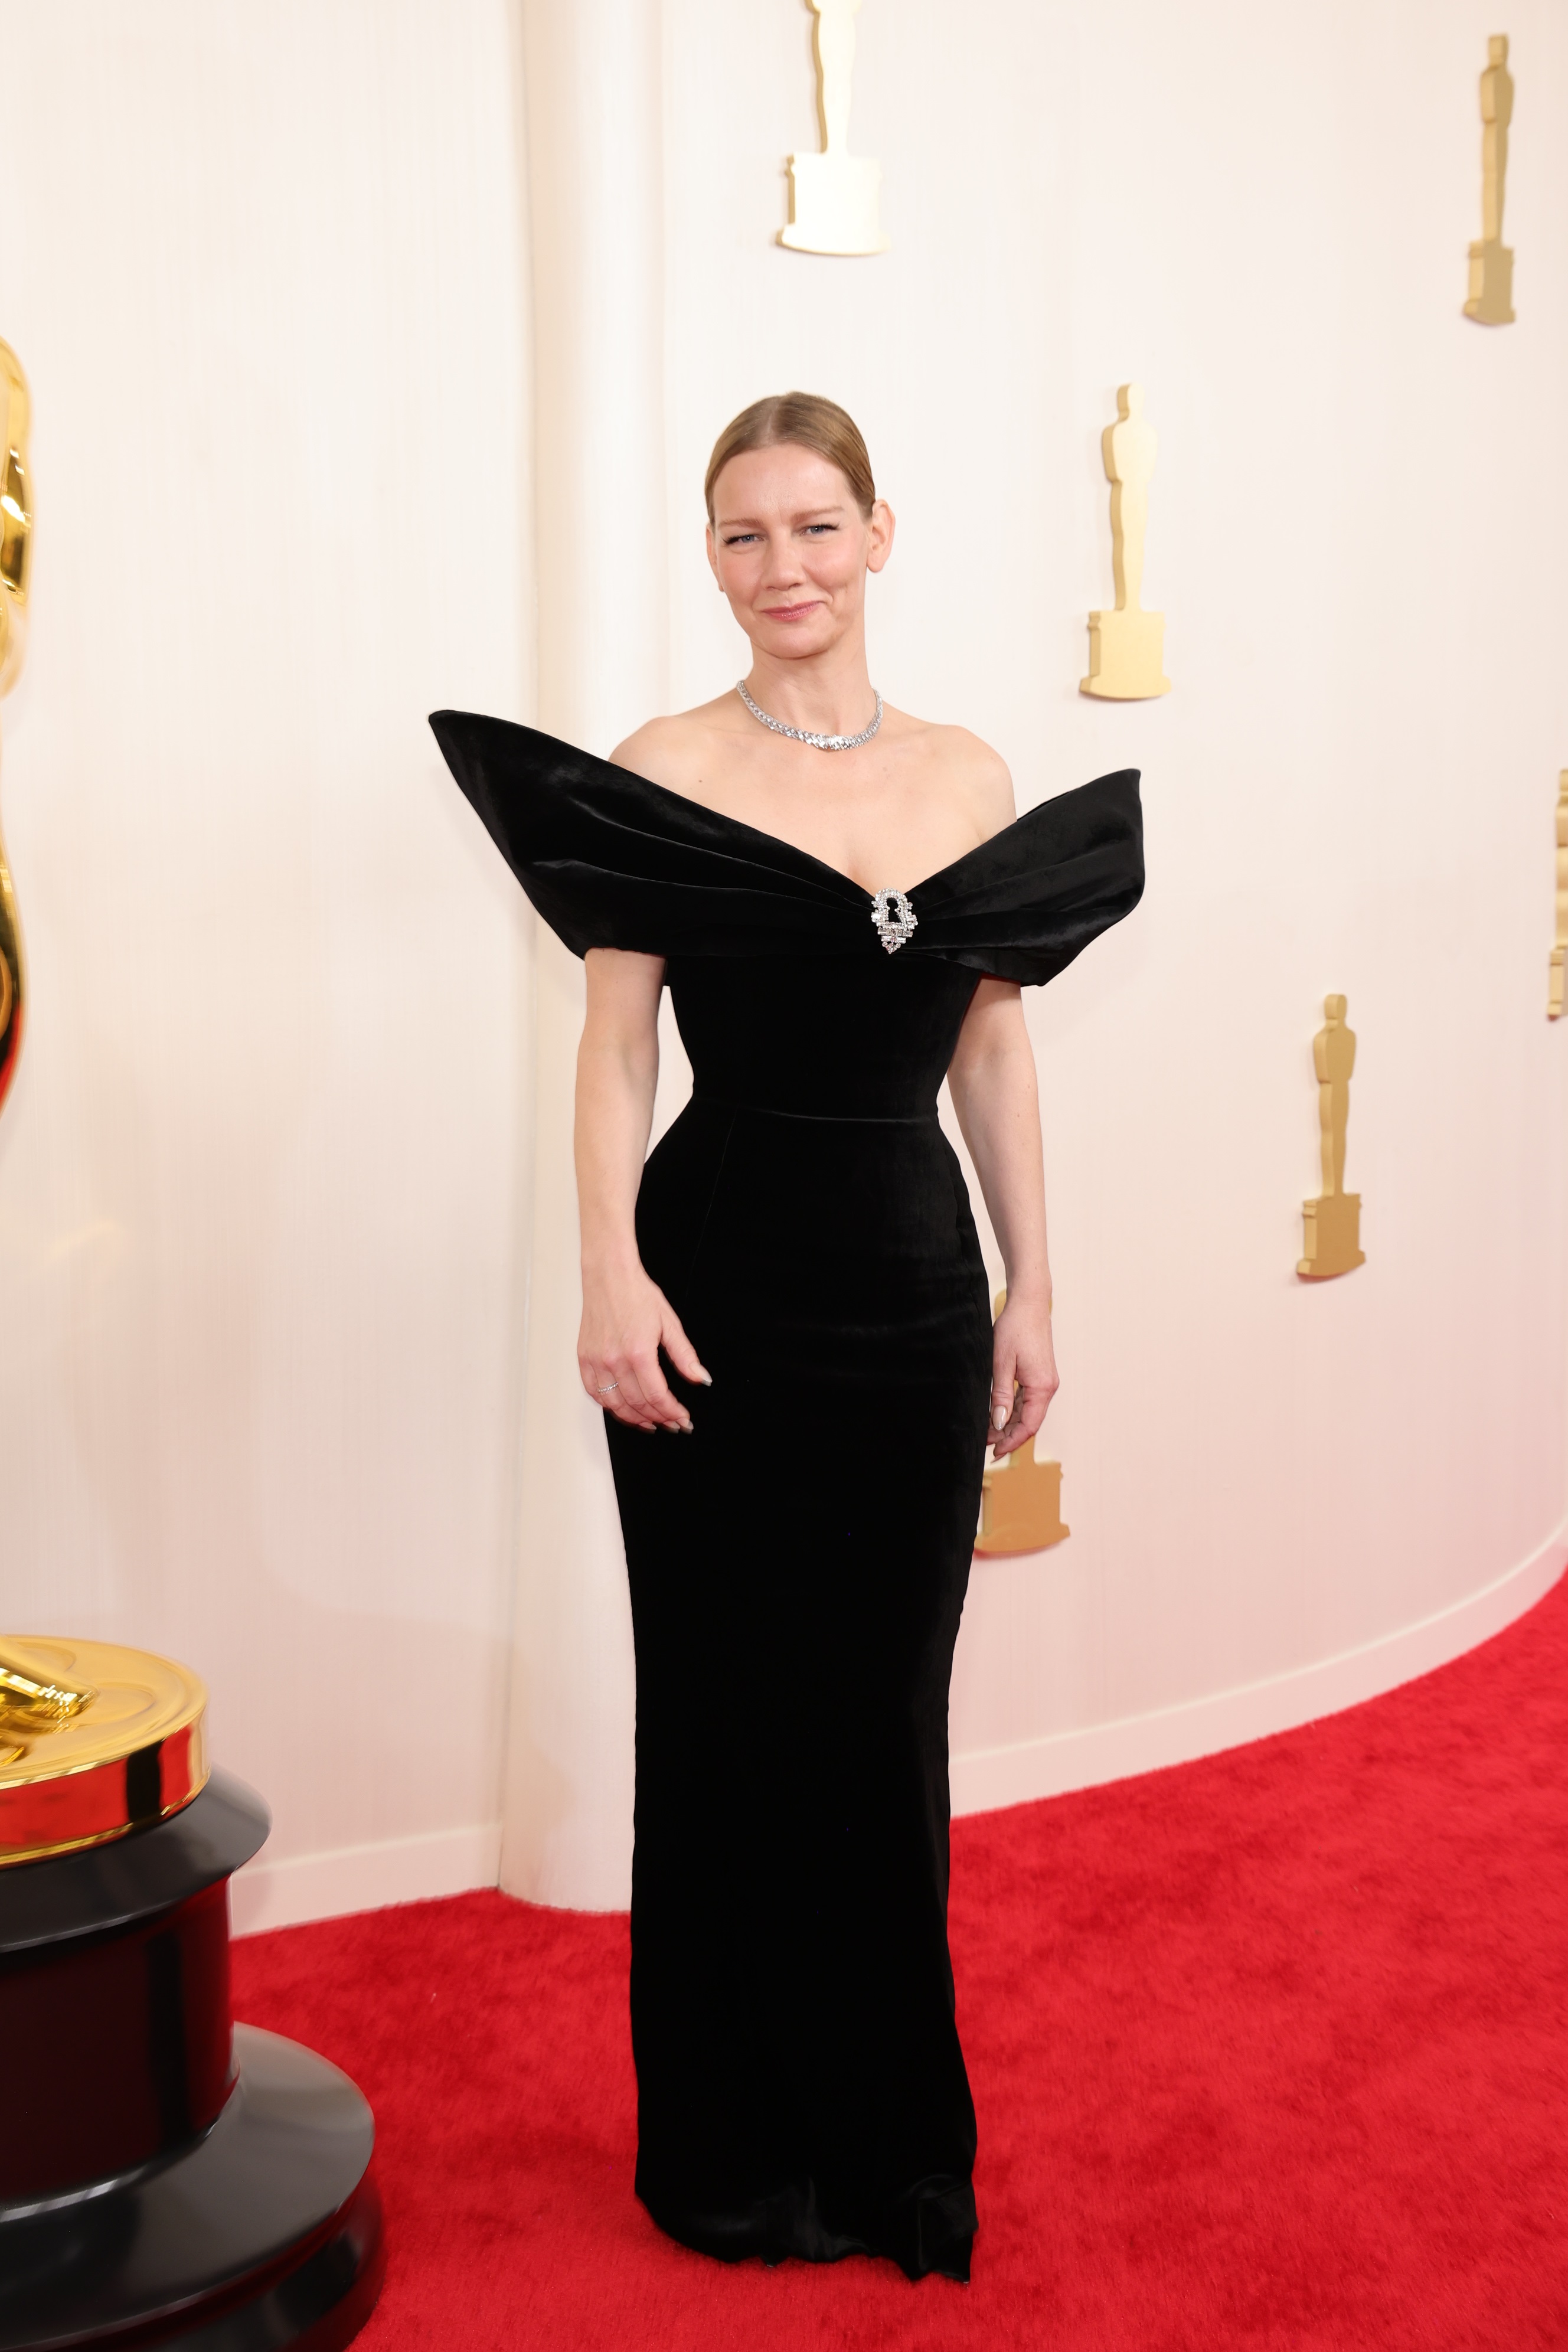 Sandra Hüller on the Oscars red carpet in a tight black dress